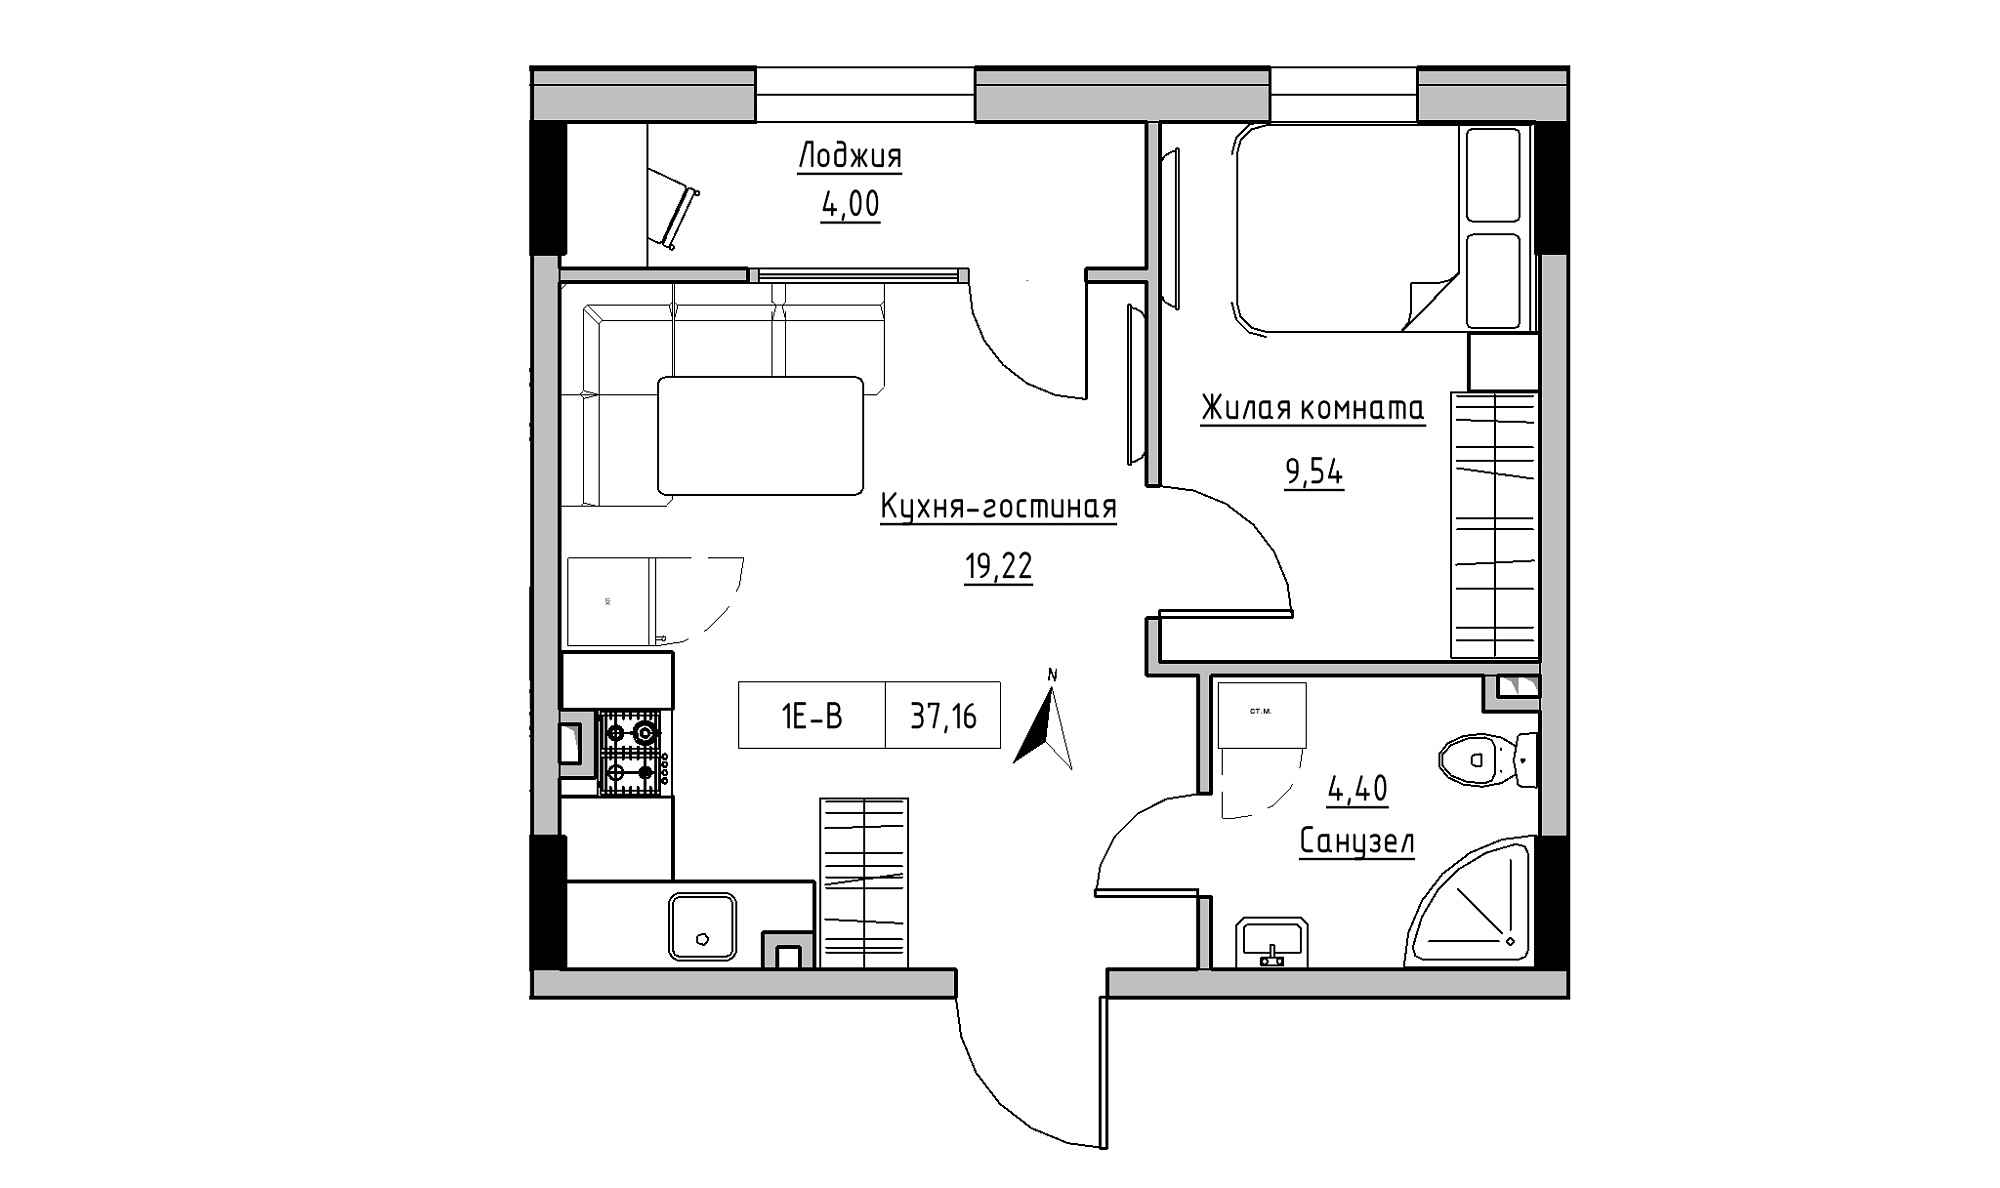 Planning 1-rm flats area 37.16m2, KS-025-01/0008.